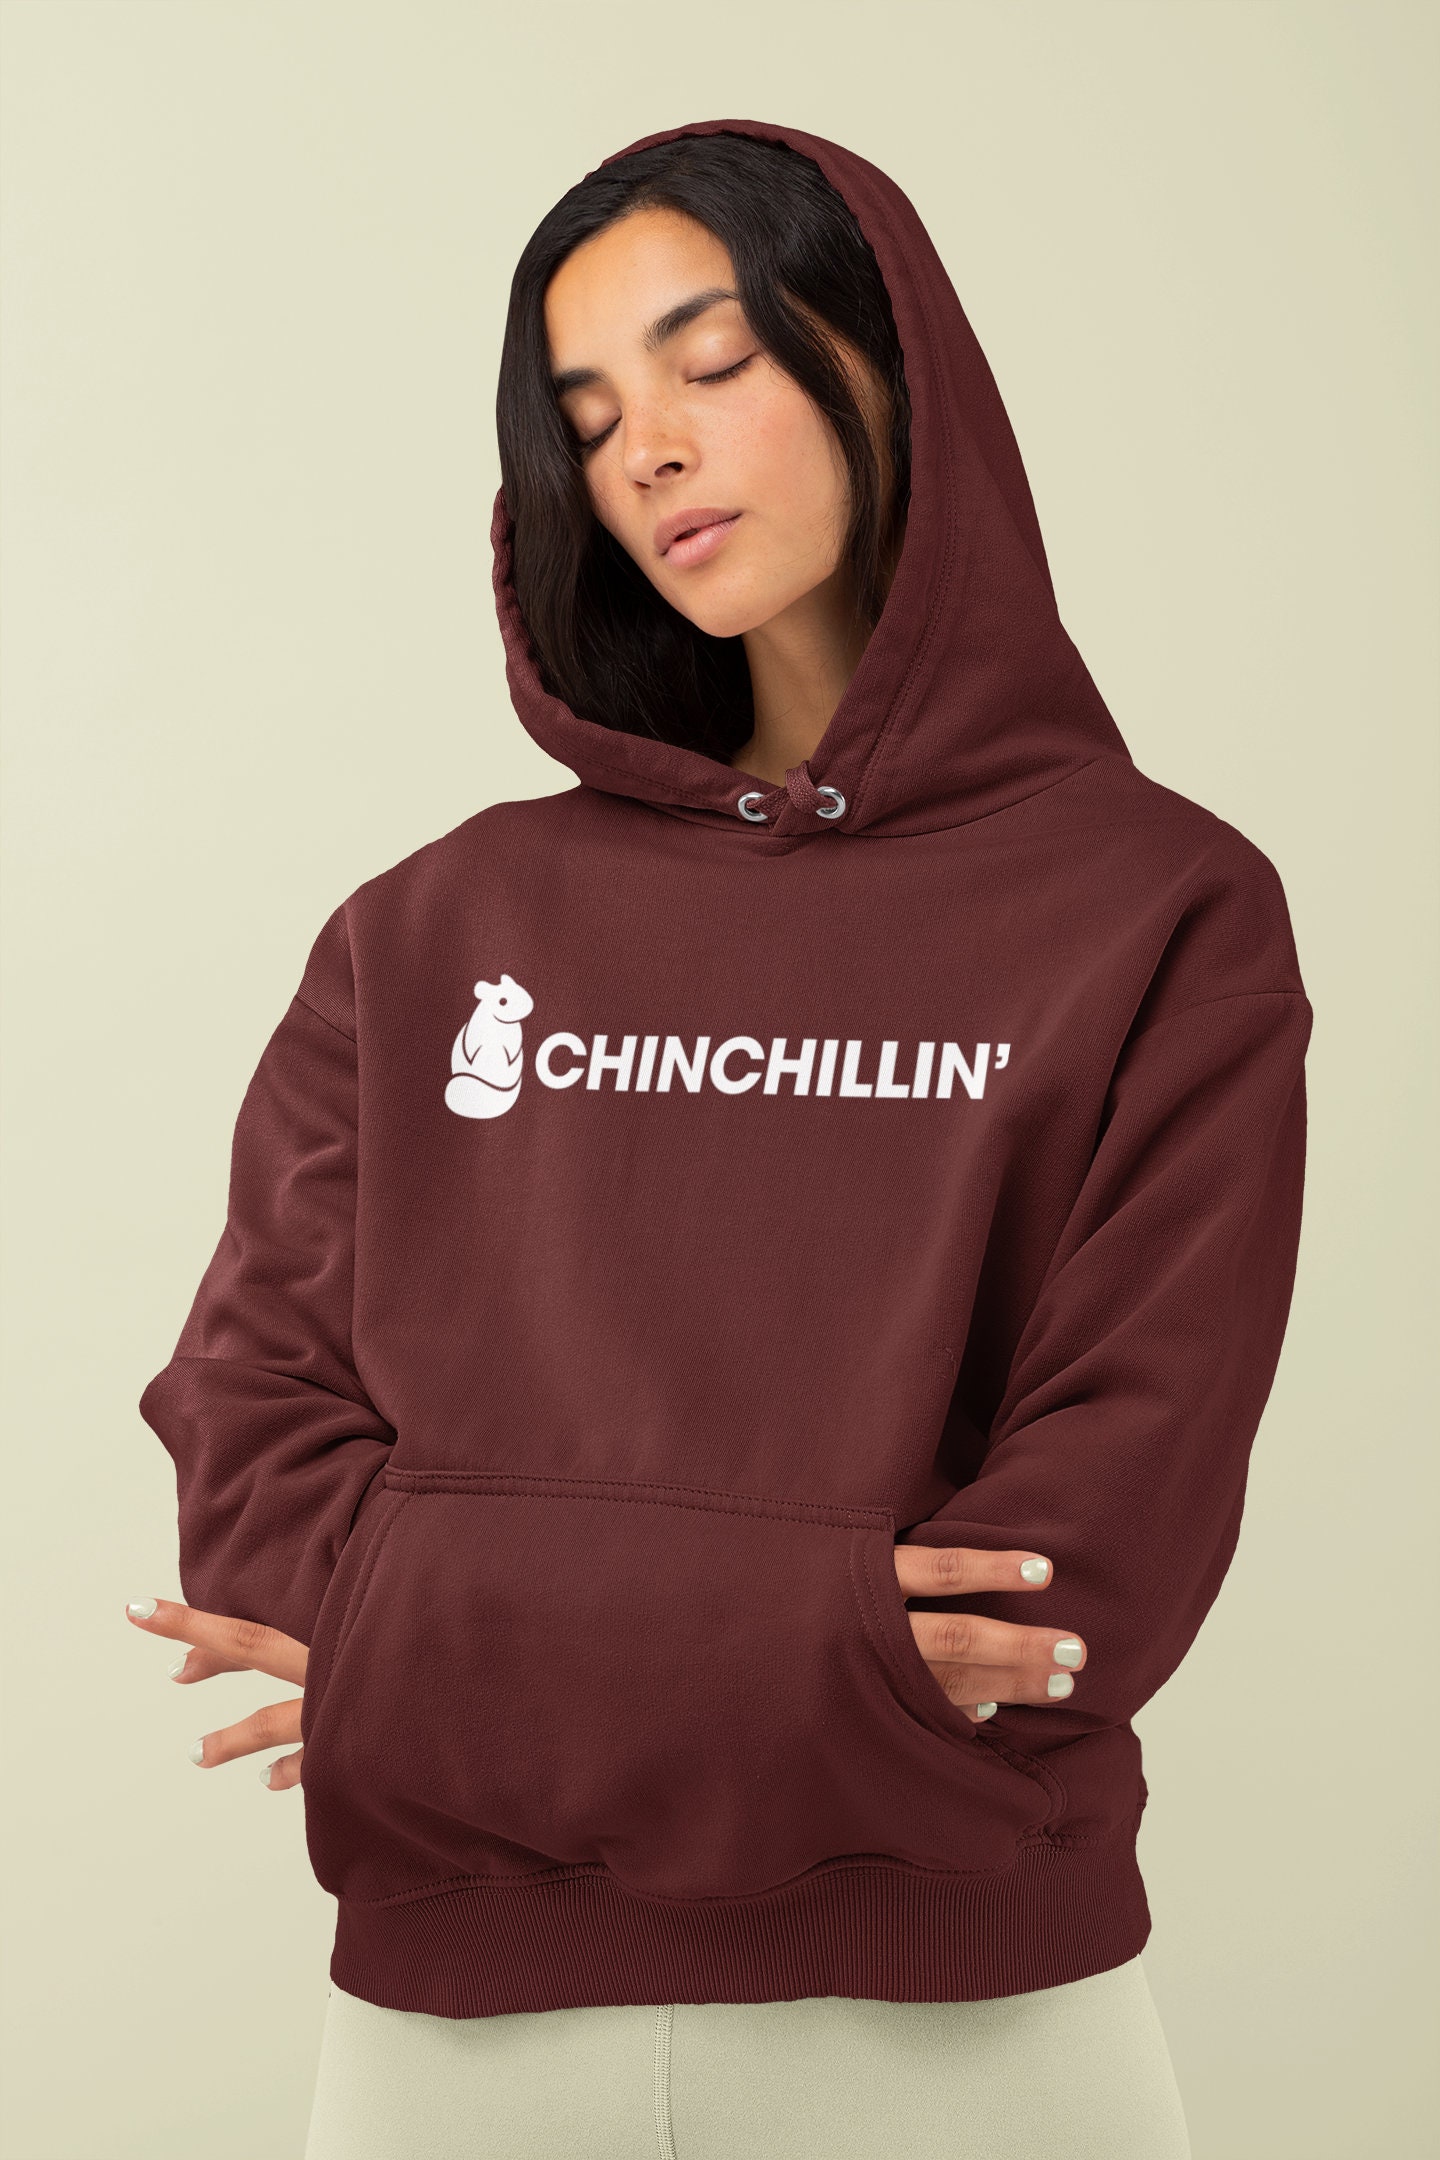 Chinchillin' Unisex Pullover Hoodie Sweatshirt Perfect | Etsy